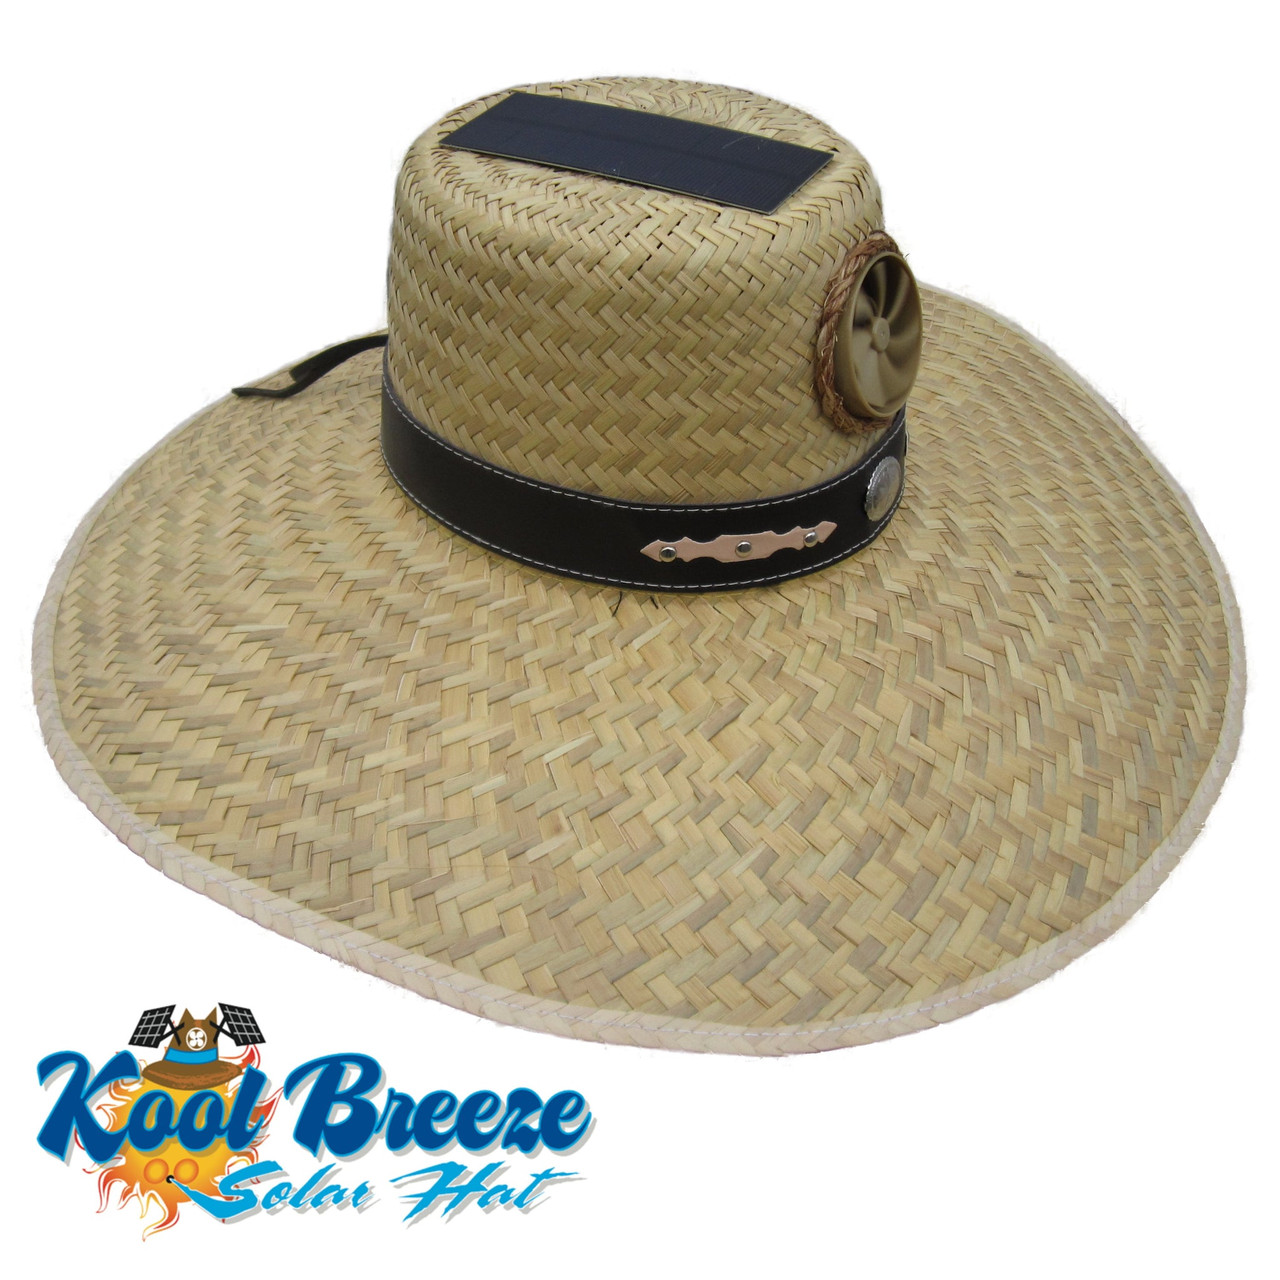 Kool Breeze Solar Hats Gardener Solar Straw Hat w. Band